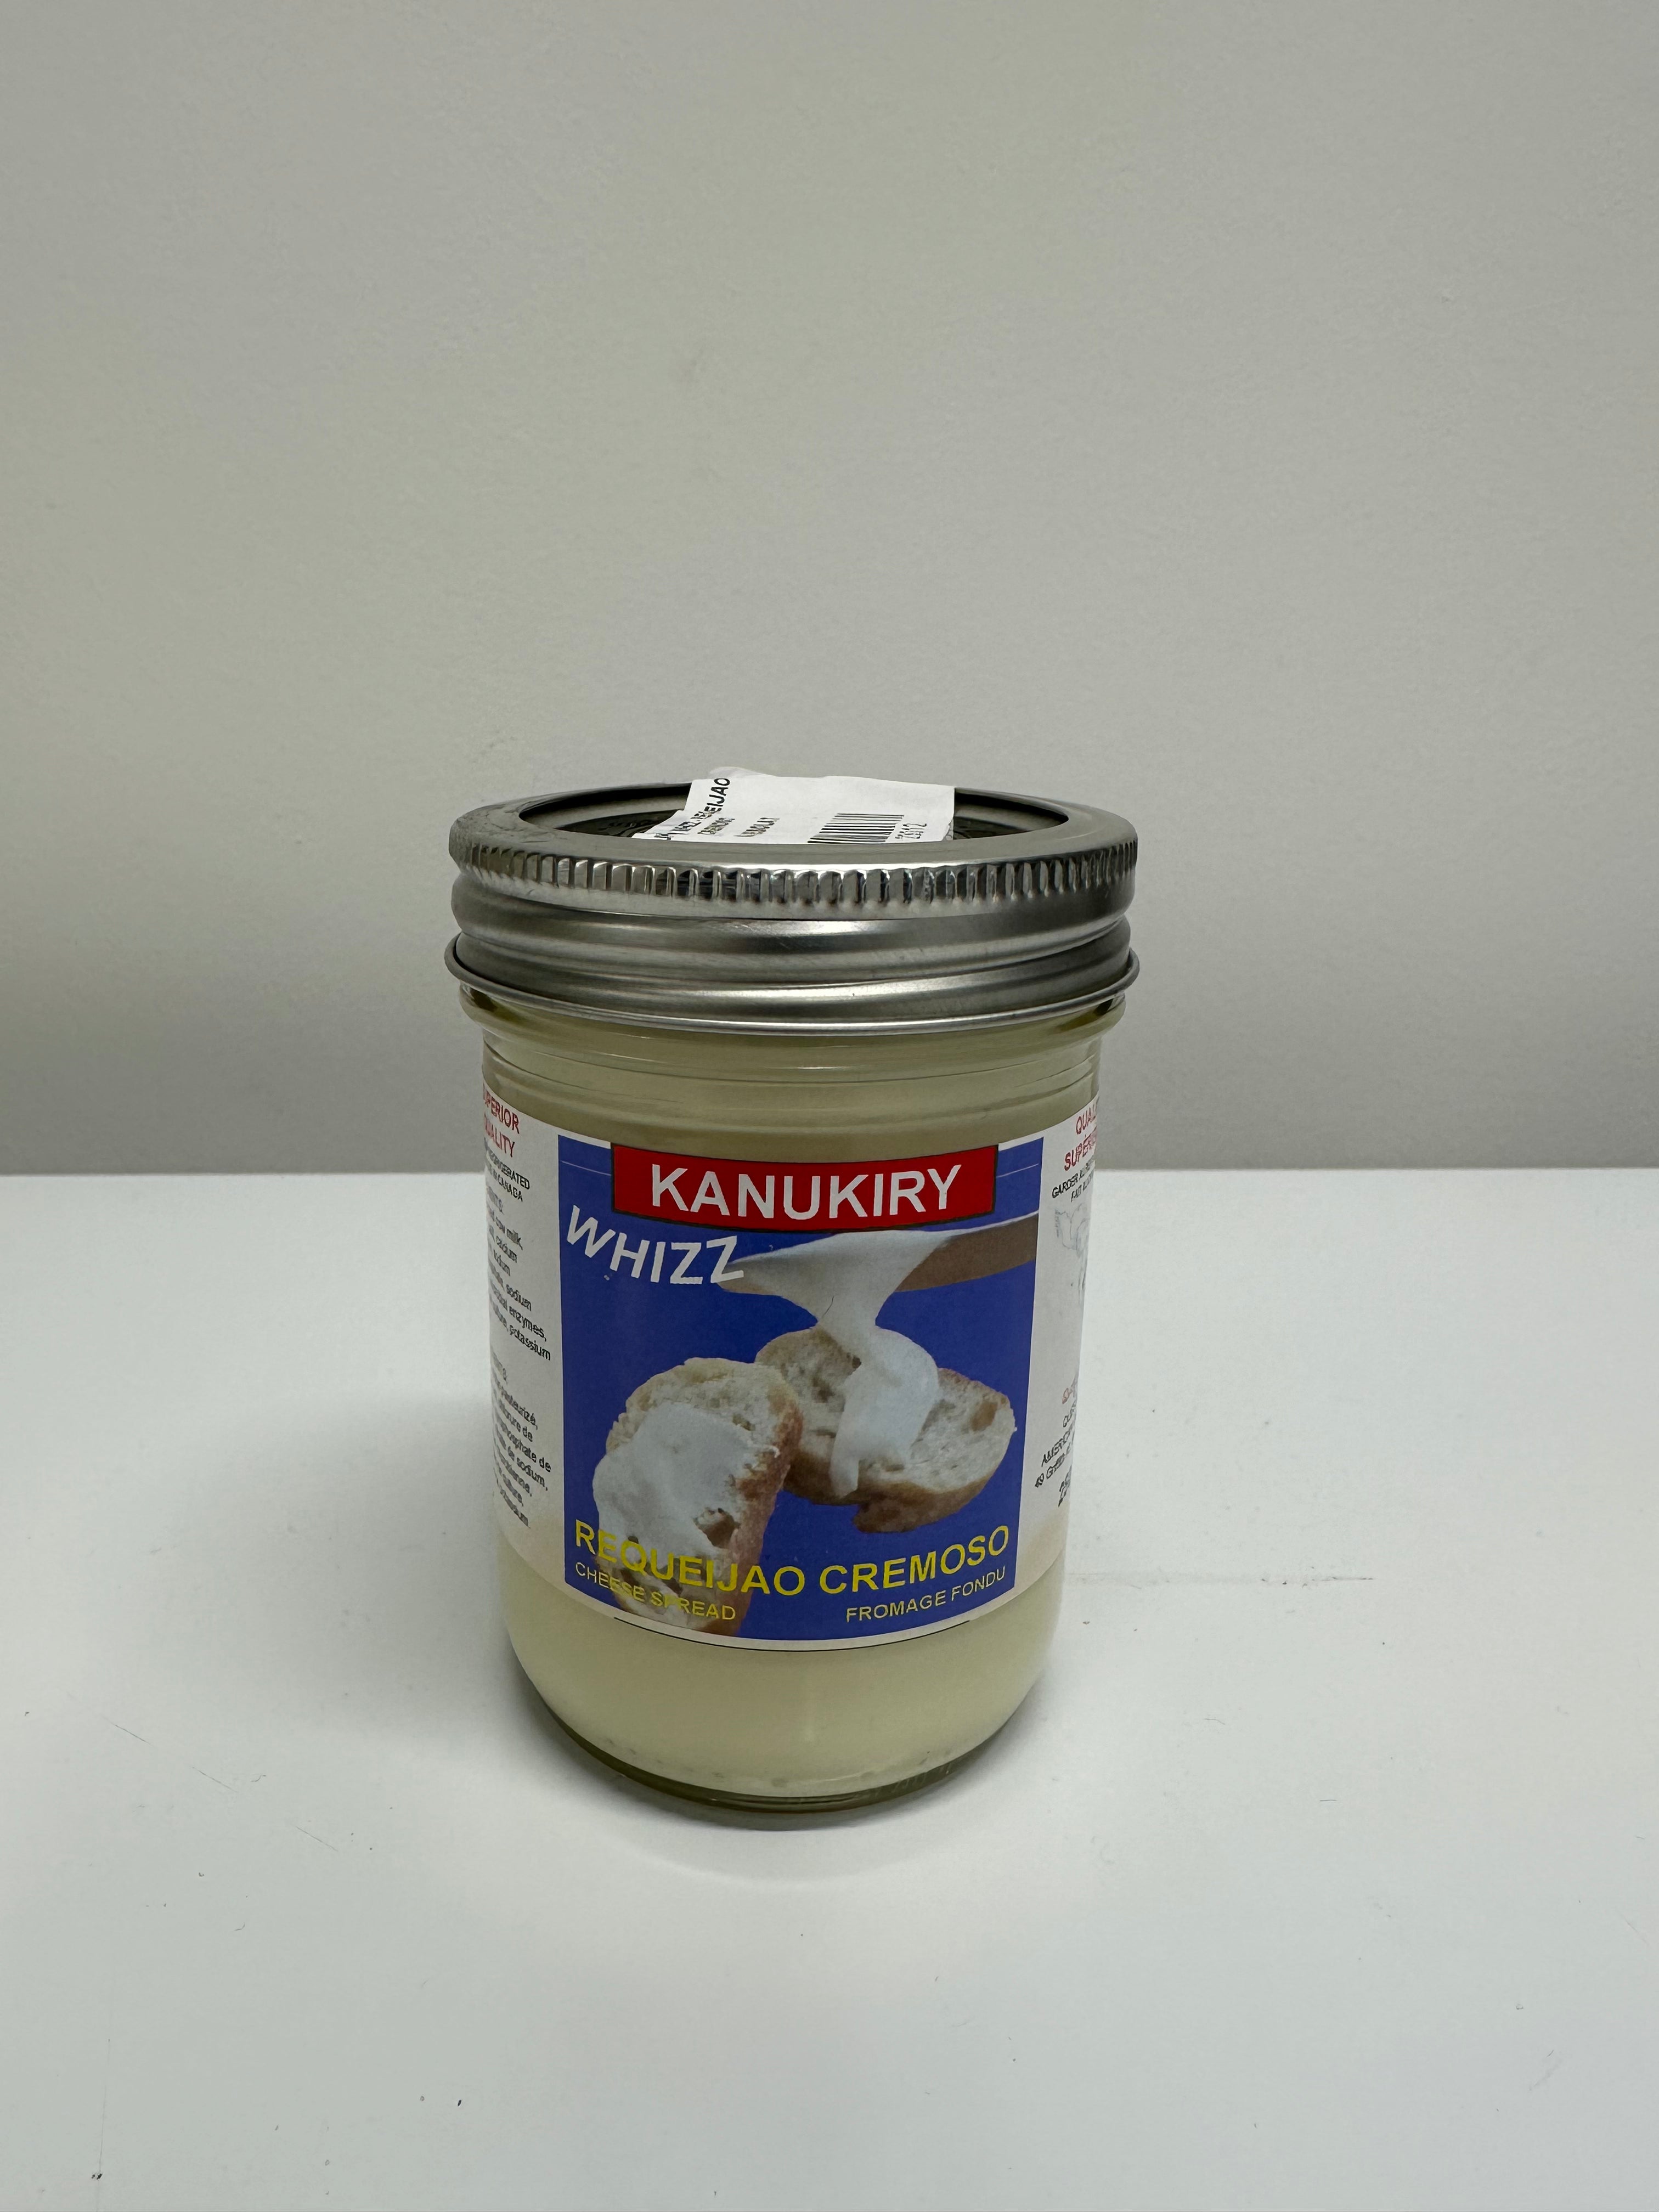 QUESOLAT - Kanukiry Whizz (Cheese Spread) 250g